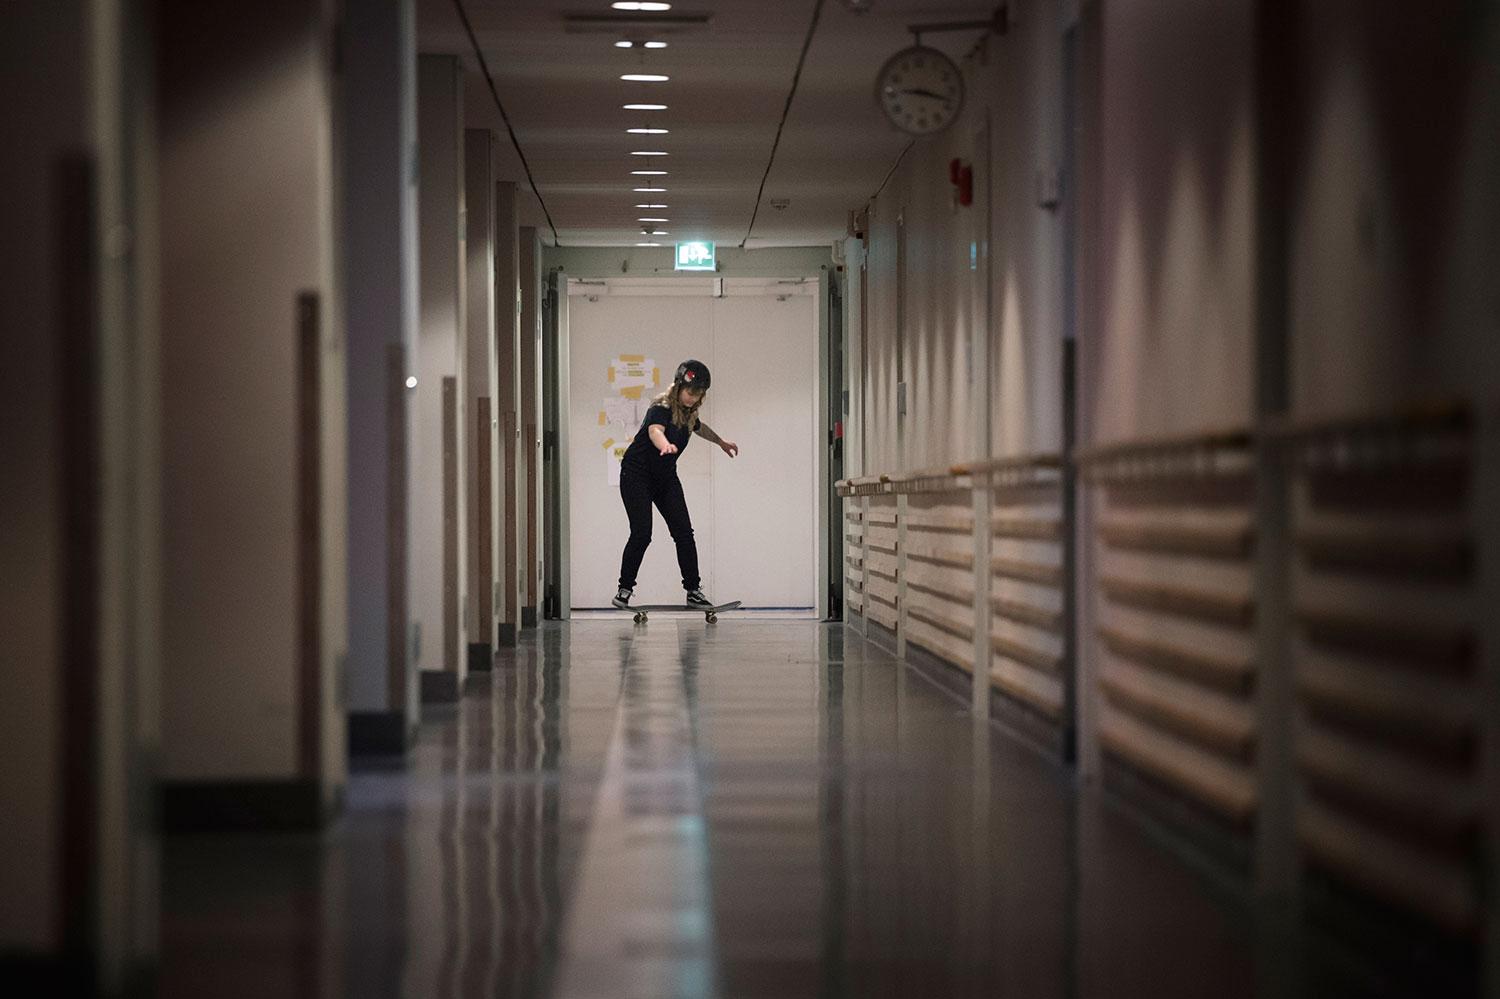 25 februari. "Radical rehab" kallar Malin det. Hon har schemalagd skateboardåkning i sjukhusets korridorer.